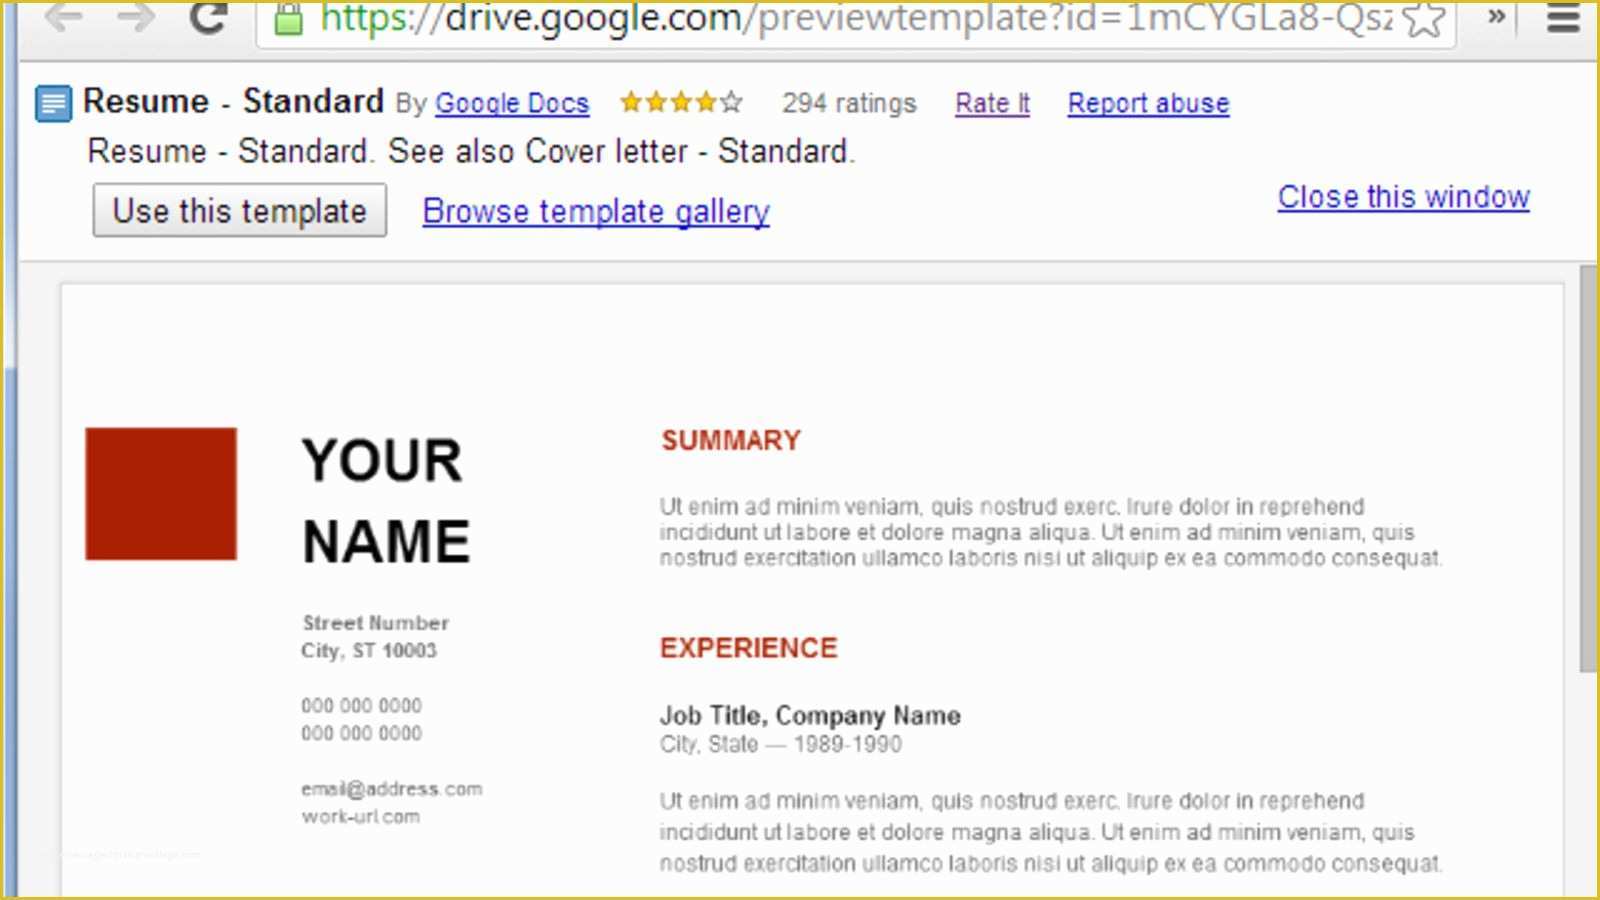 Google Docs Resume Template Free Of Use Google Docs Resume Templates for A Free Good Looking